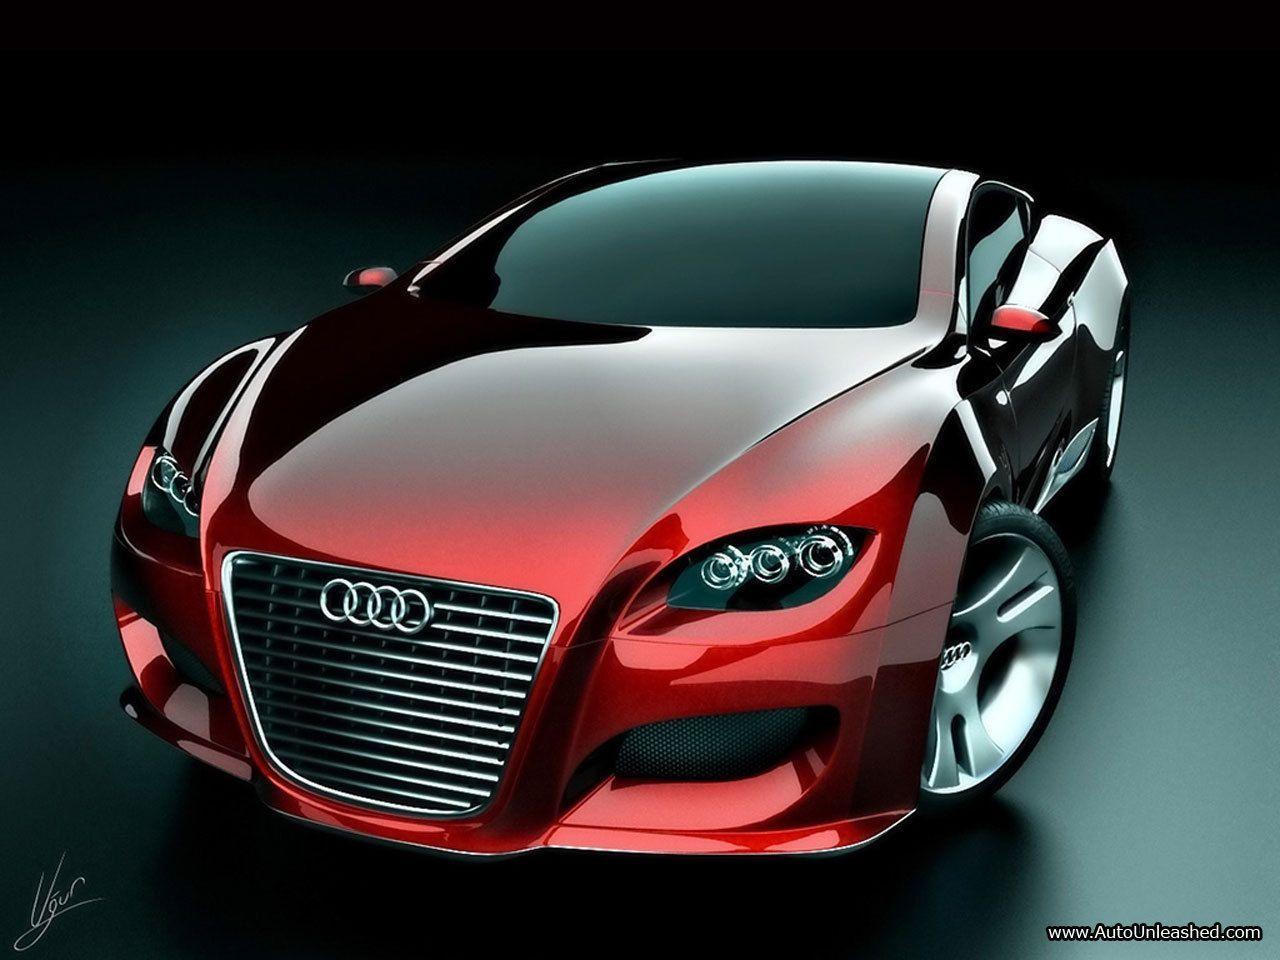 4 Circles Car Logo - Audi locus concept. Most Wanted Car's